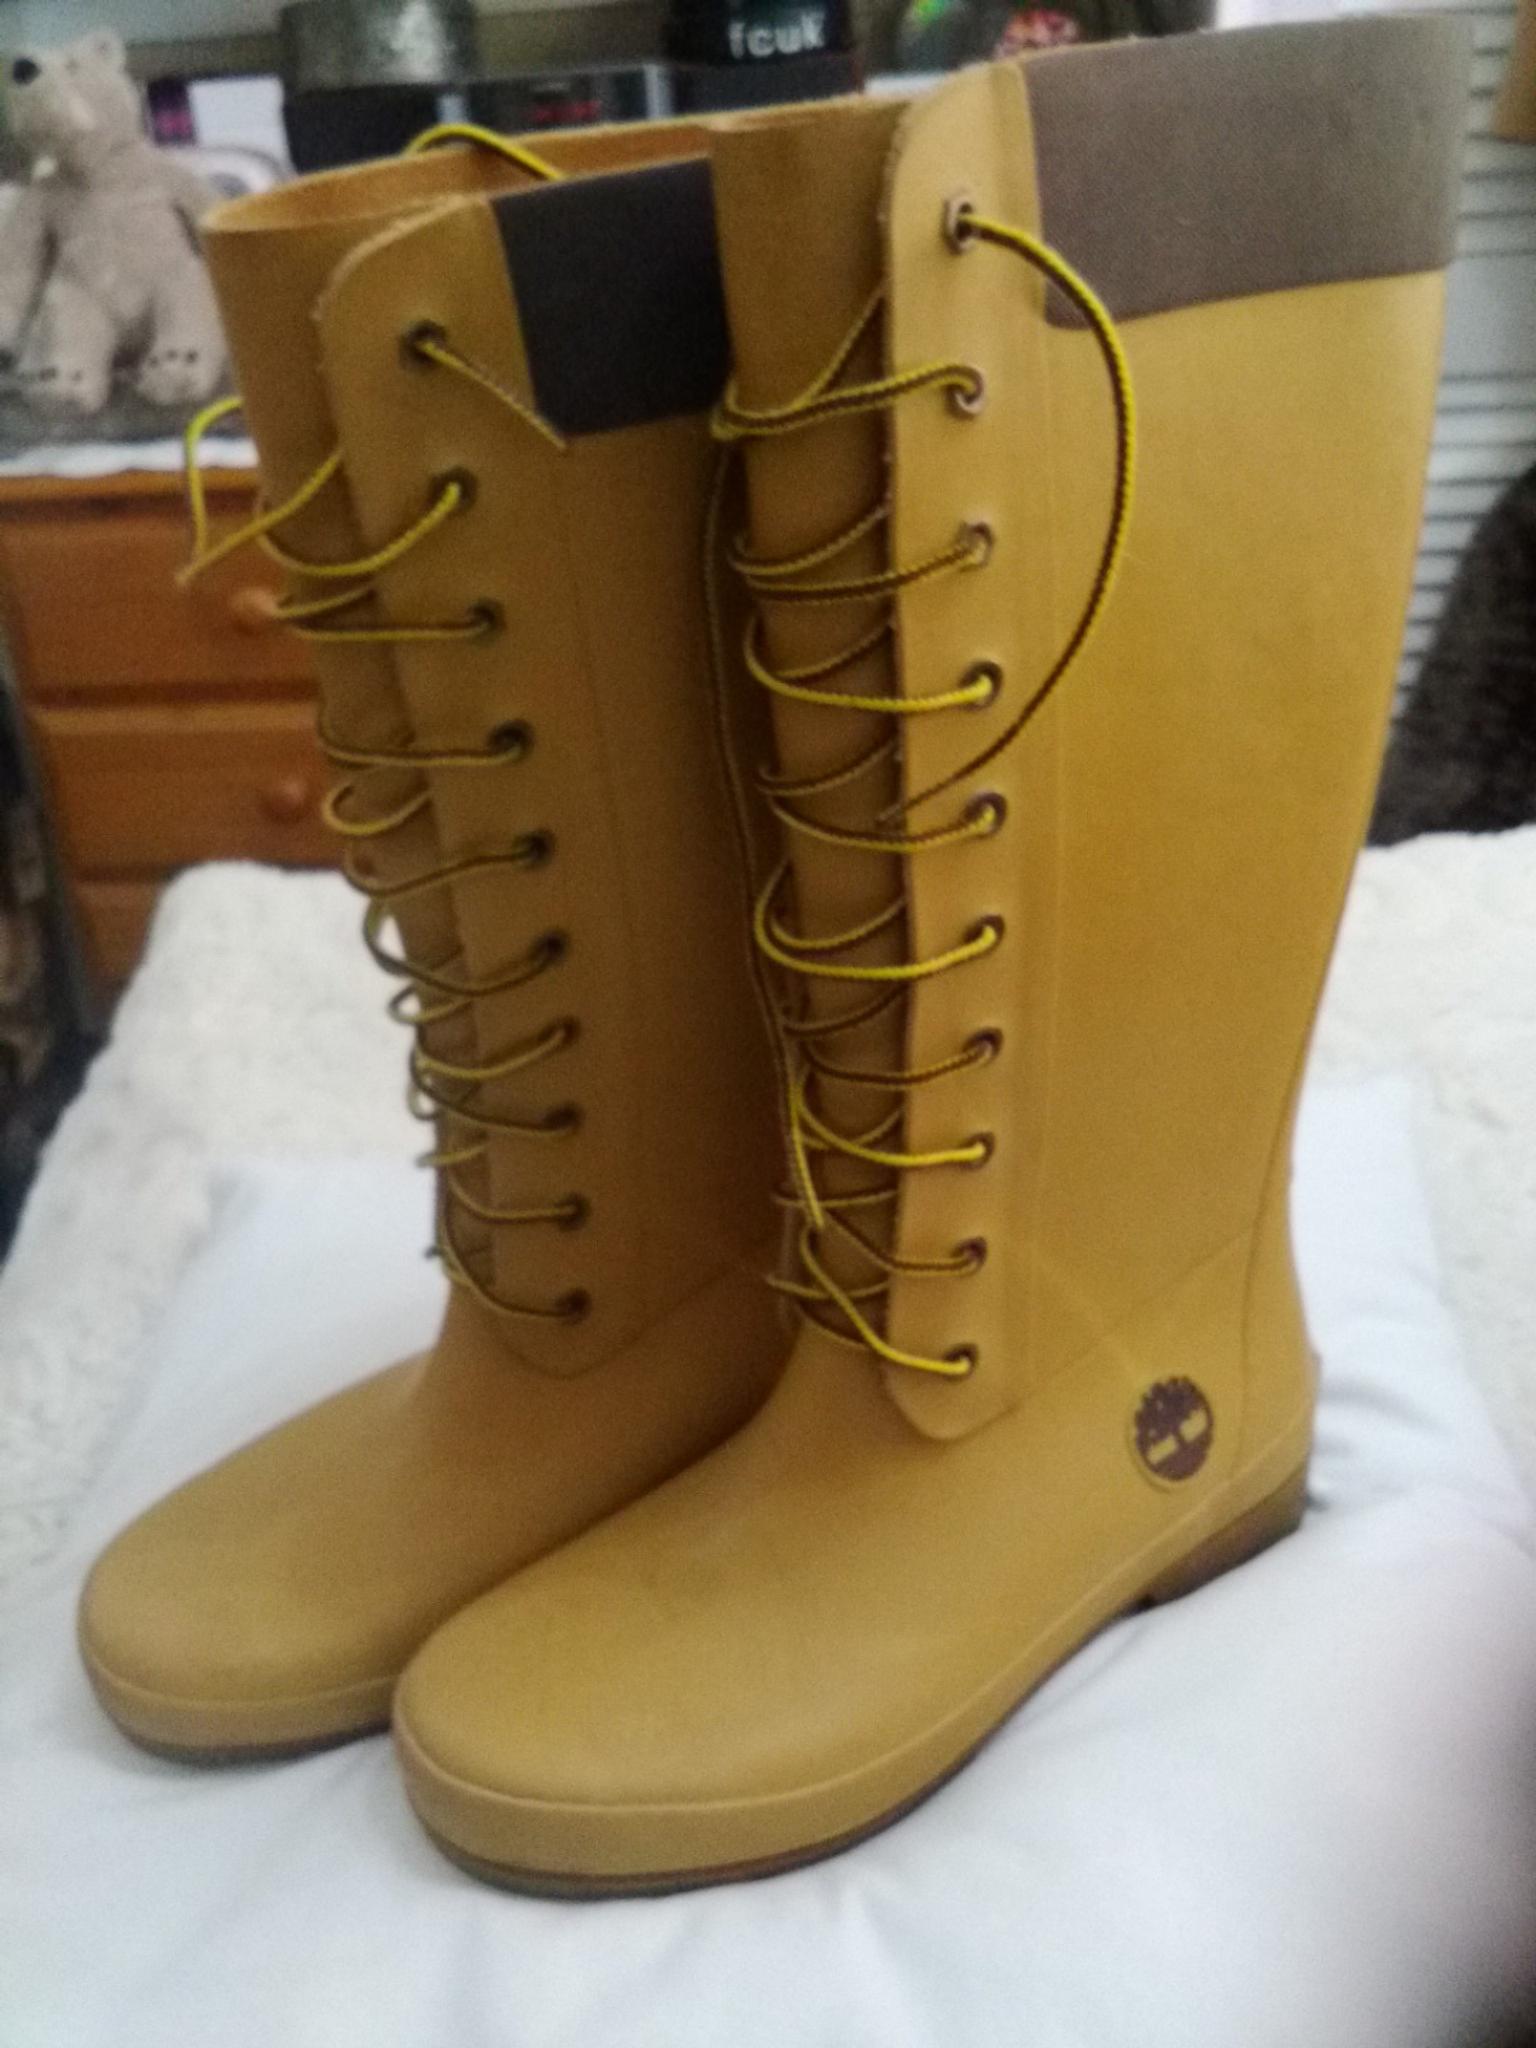 timberland wellington boots